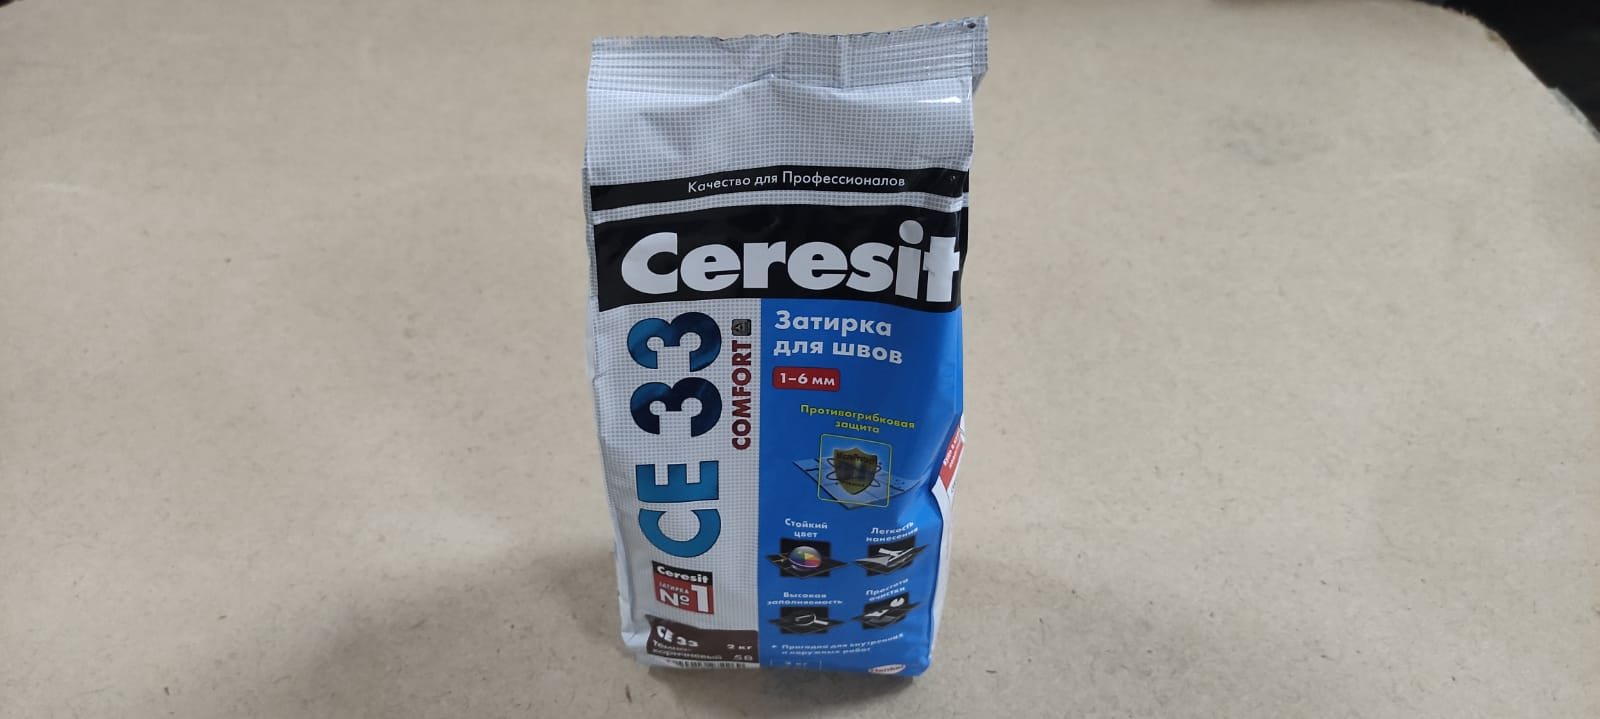 Затирка для швов 1-6 мм Ceresit / Церезит СЕ 33 Comfort 2 кг (цвет: Темно-коричневый)